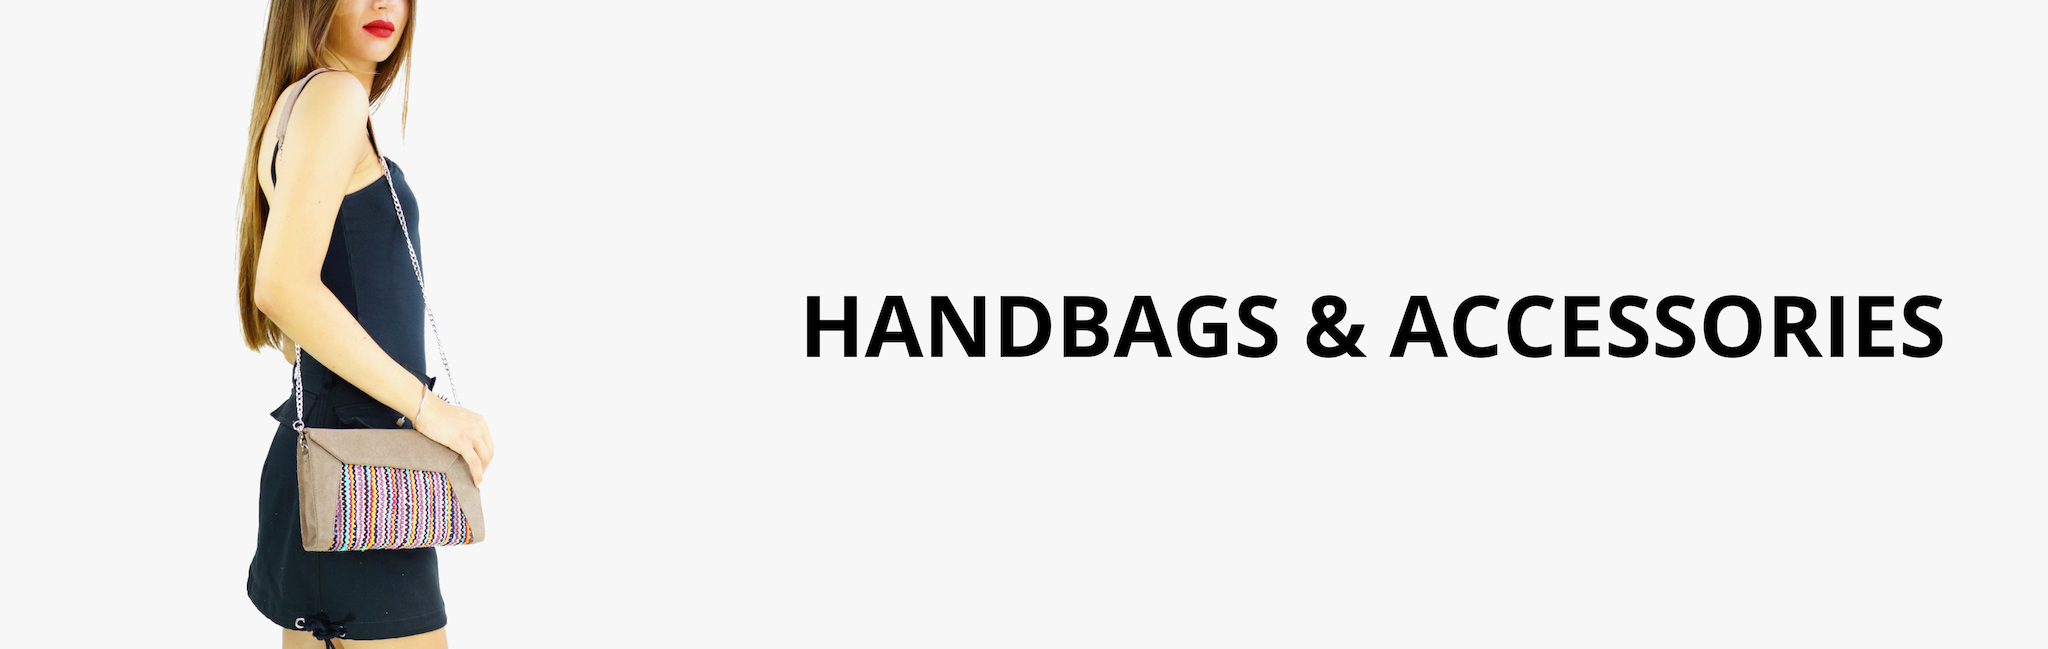 Women's Handbags and Accessories